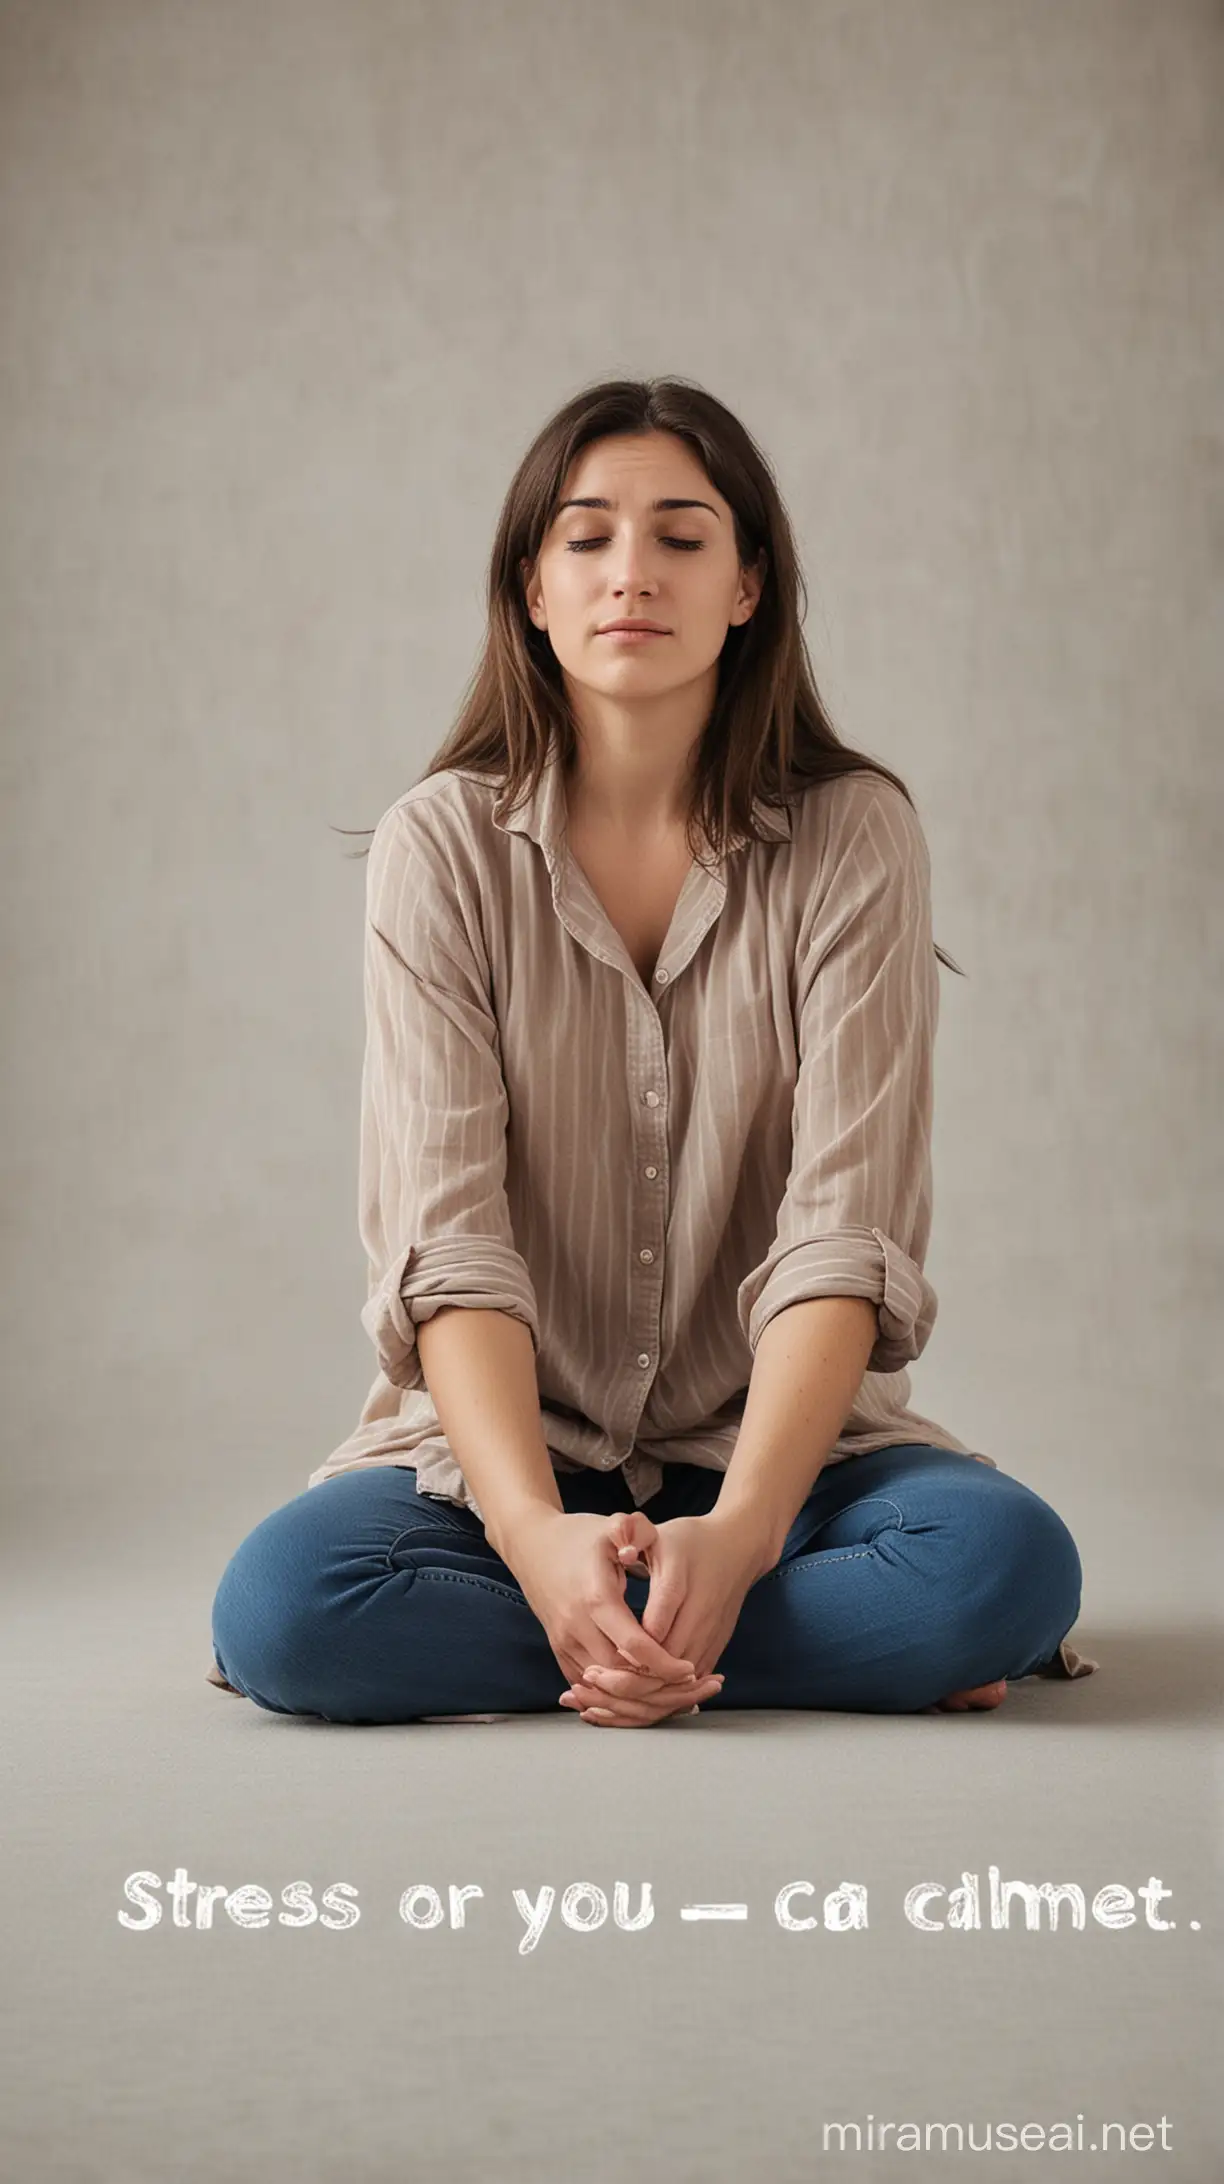 Tranquil Meditation Guide Serene Figure Easing Stress